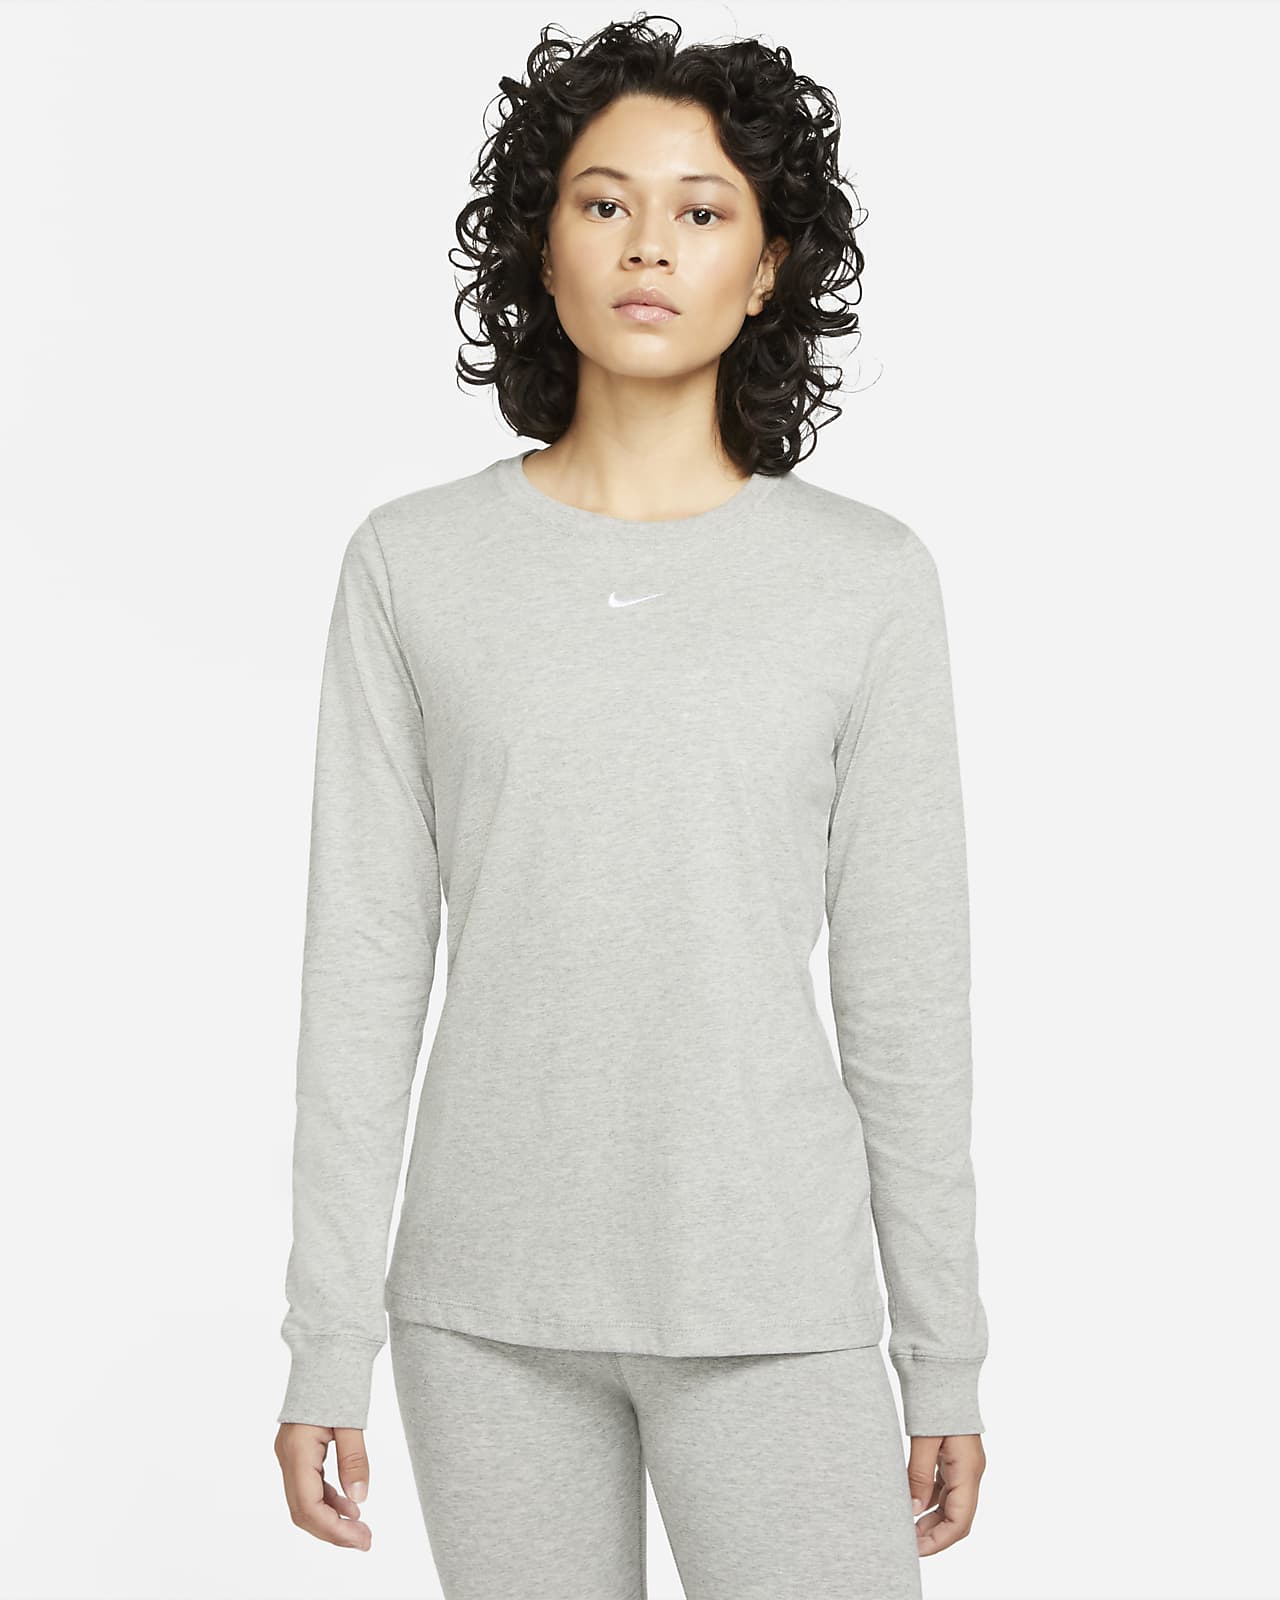 Nike Sportswear Langarm-T-Shirt für Damen